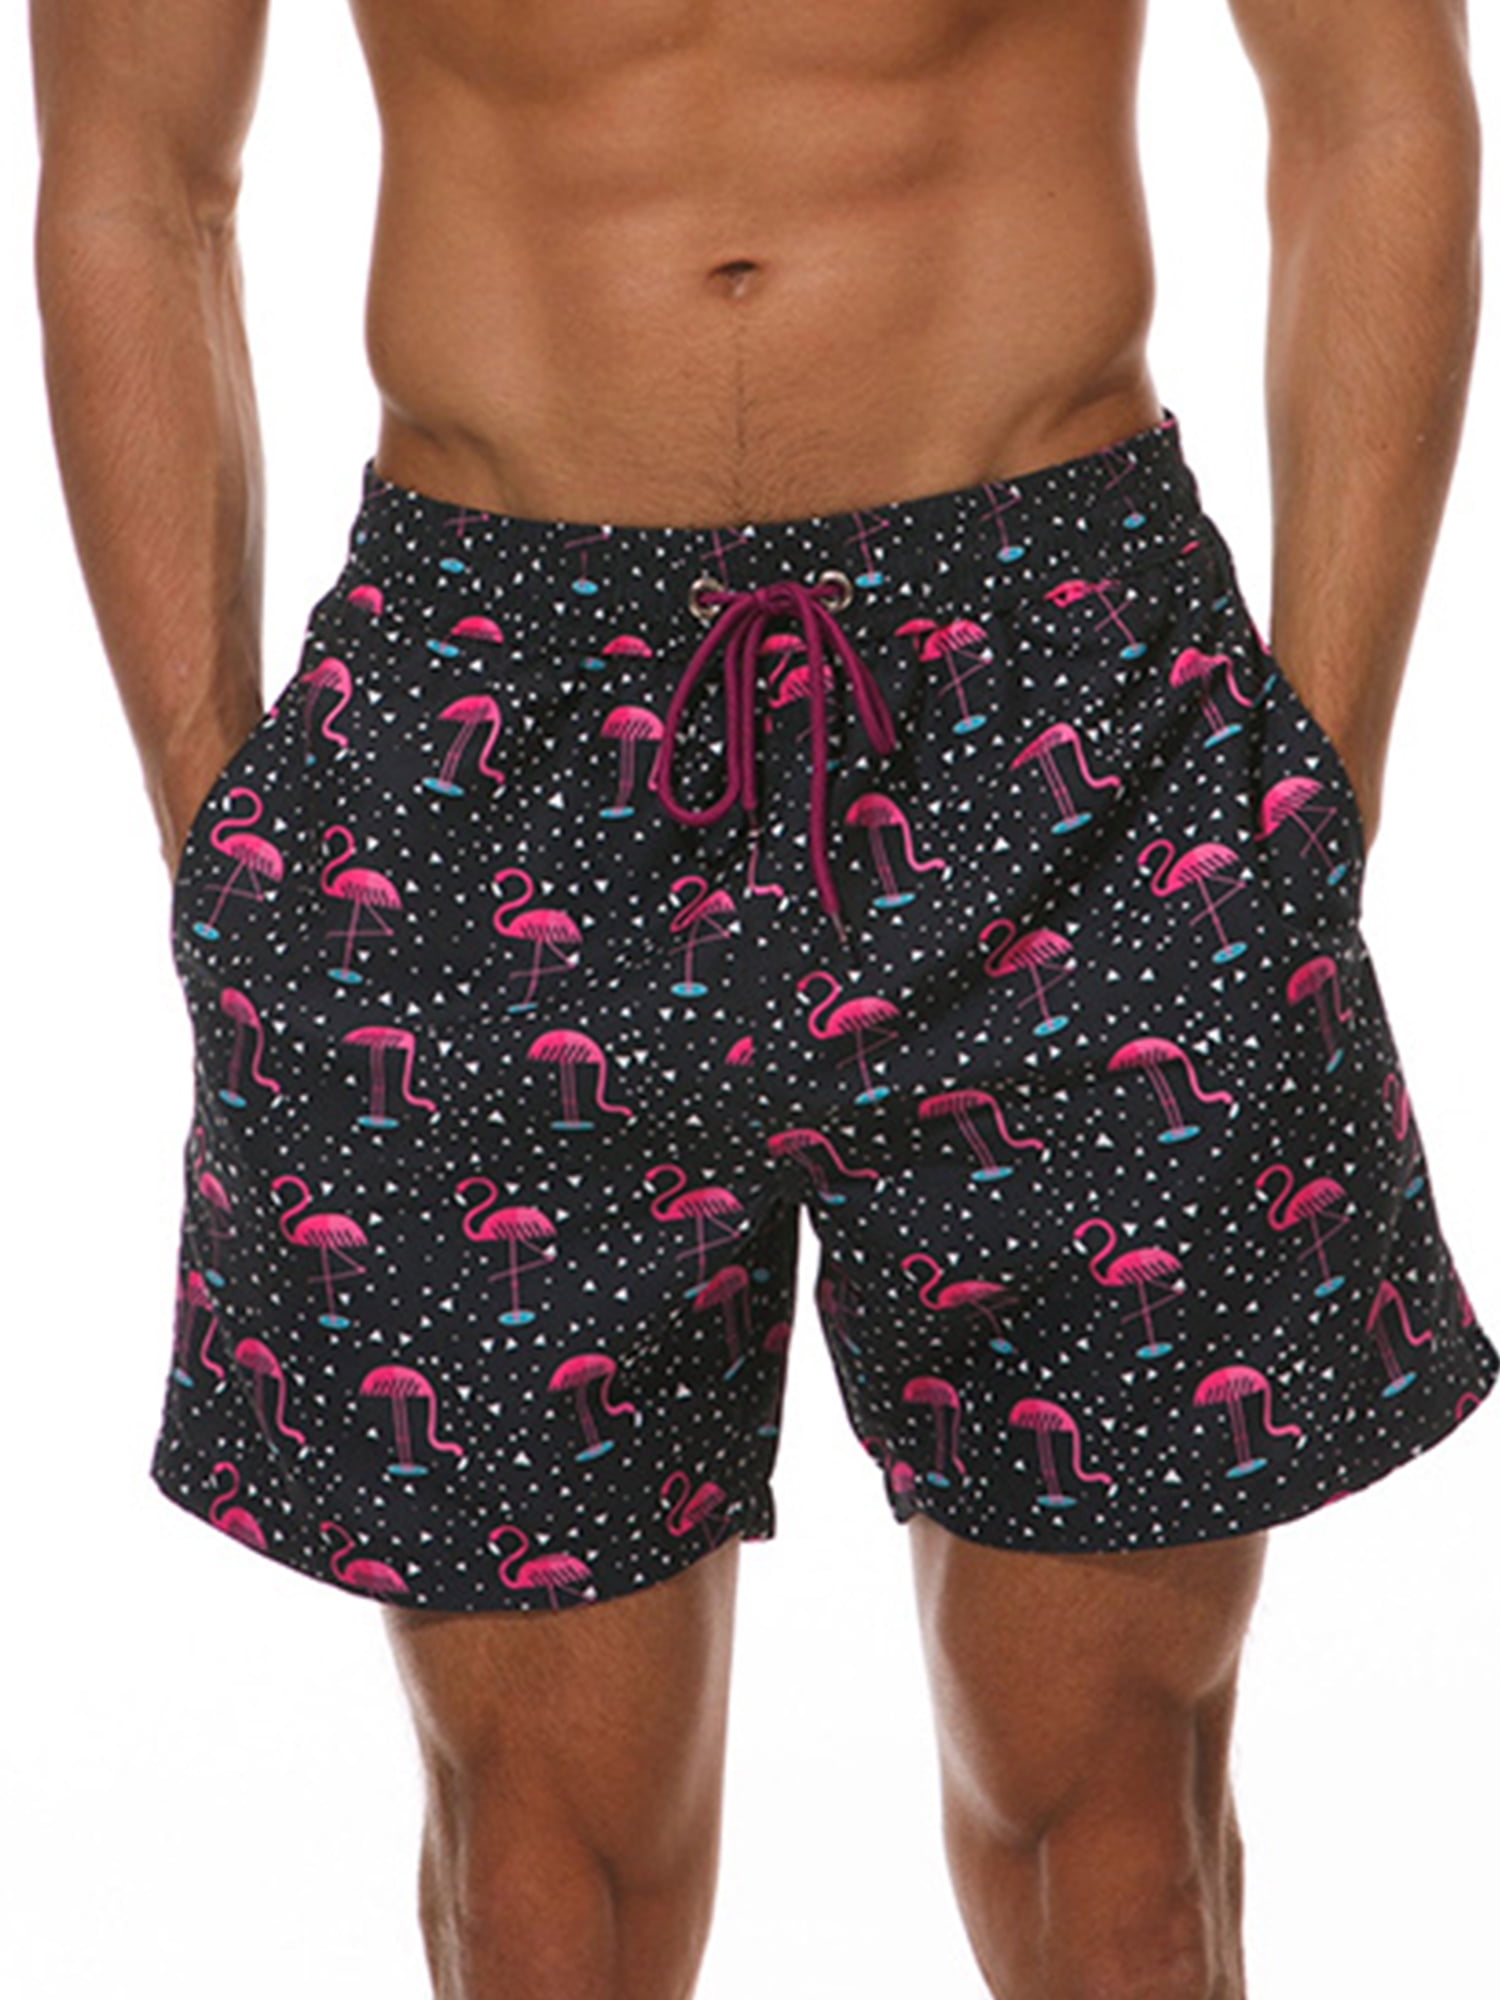 Bright Tropical Flamingos Mens Swimwear Square Cut Swimsuits Quick Dry Swim Boxer Trunks Surf Board Shorts Briefs